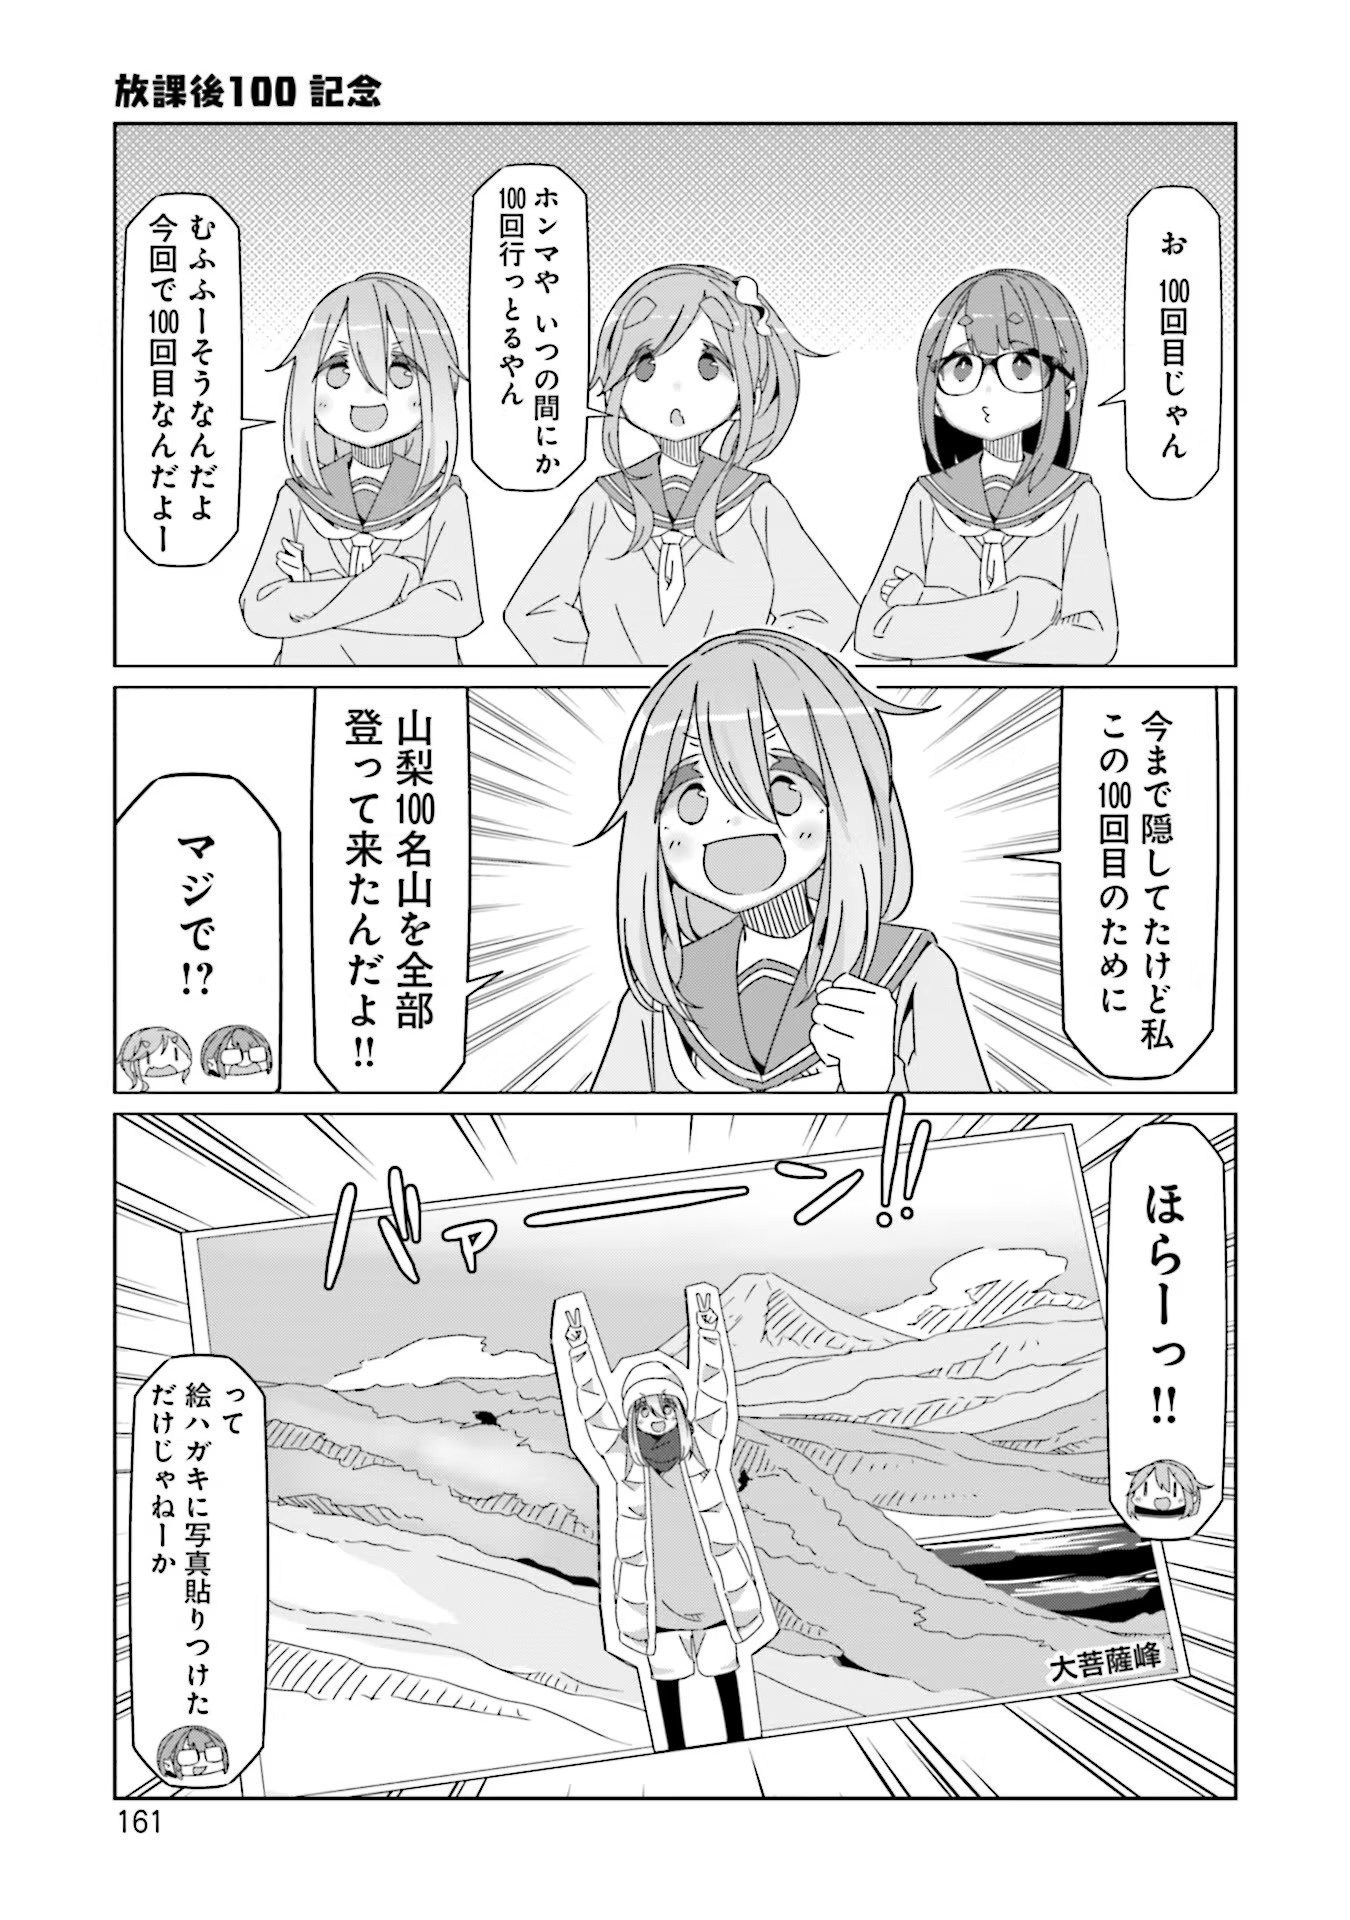 Yuru Camp - Chapter 69.5 - Page 3